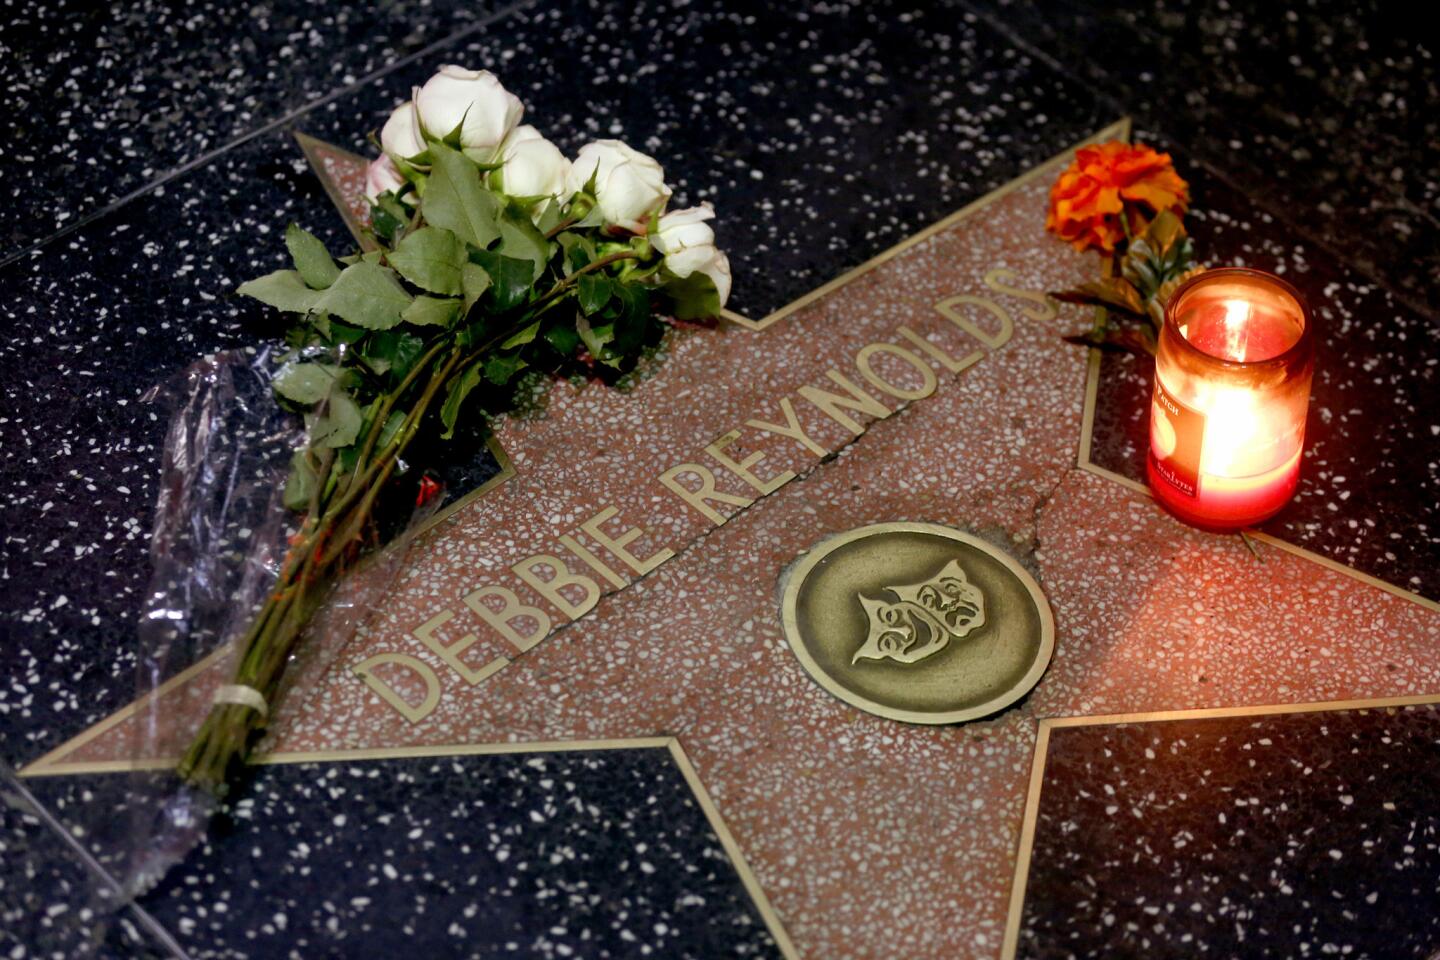 Debbie Reynolds' star along the 7000 block of Hollywood Boulevard.